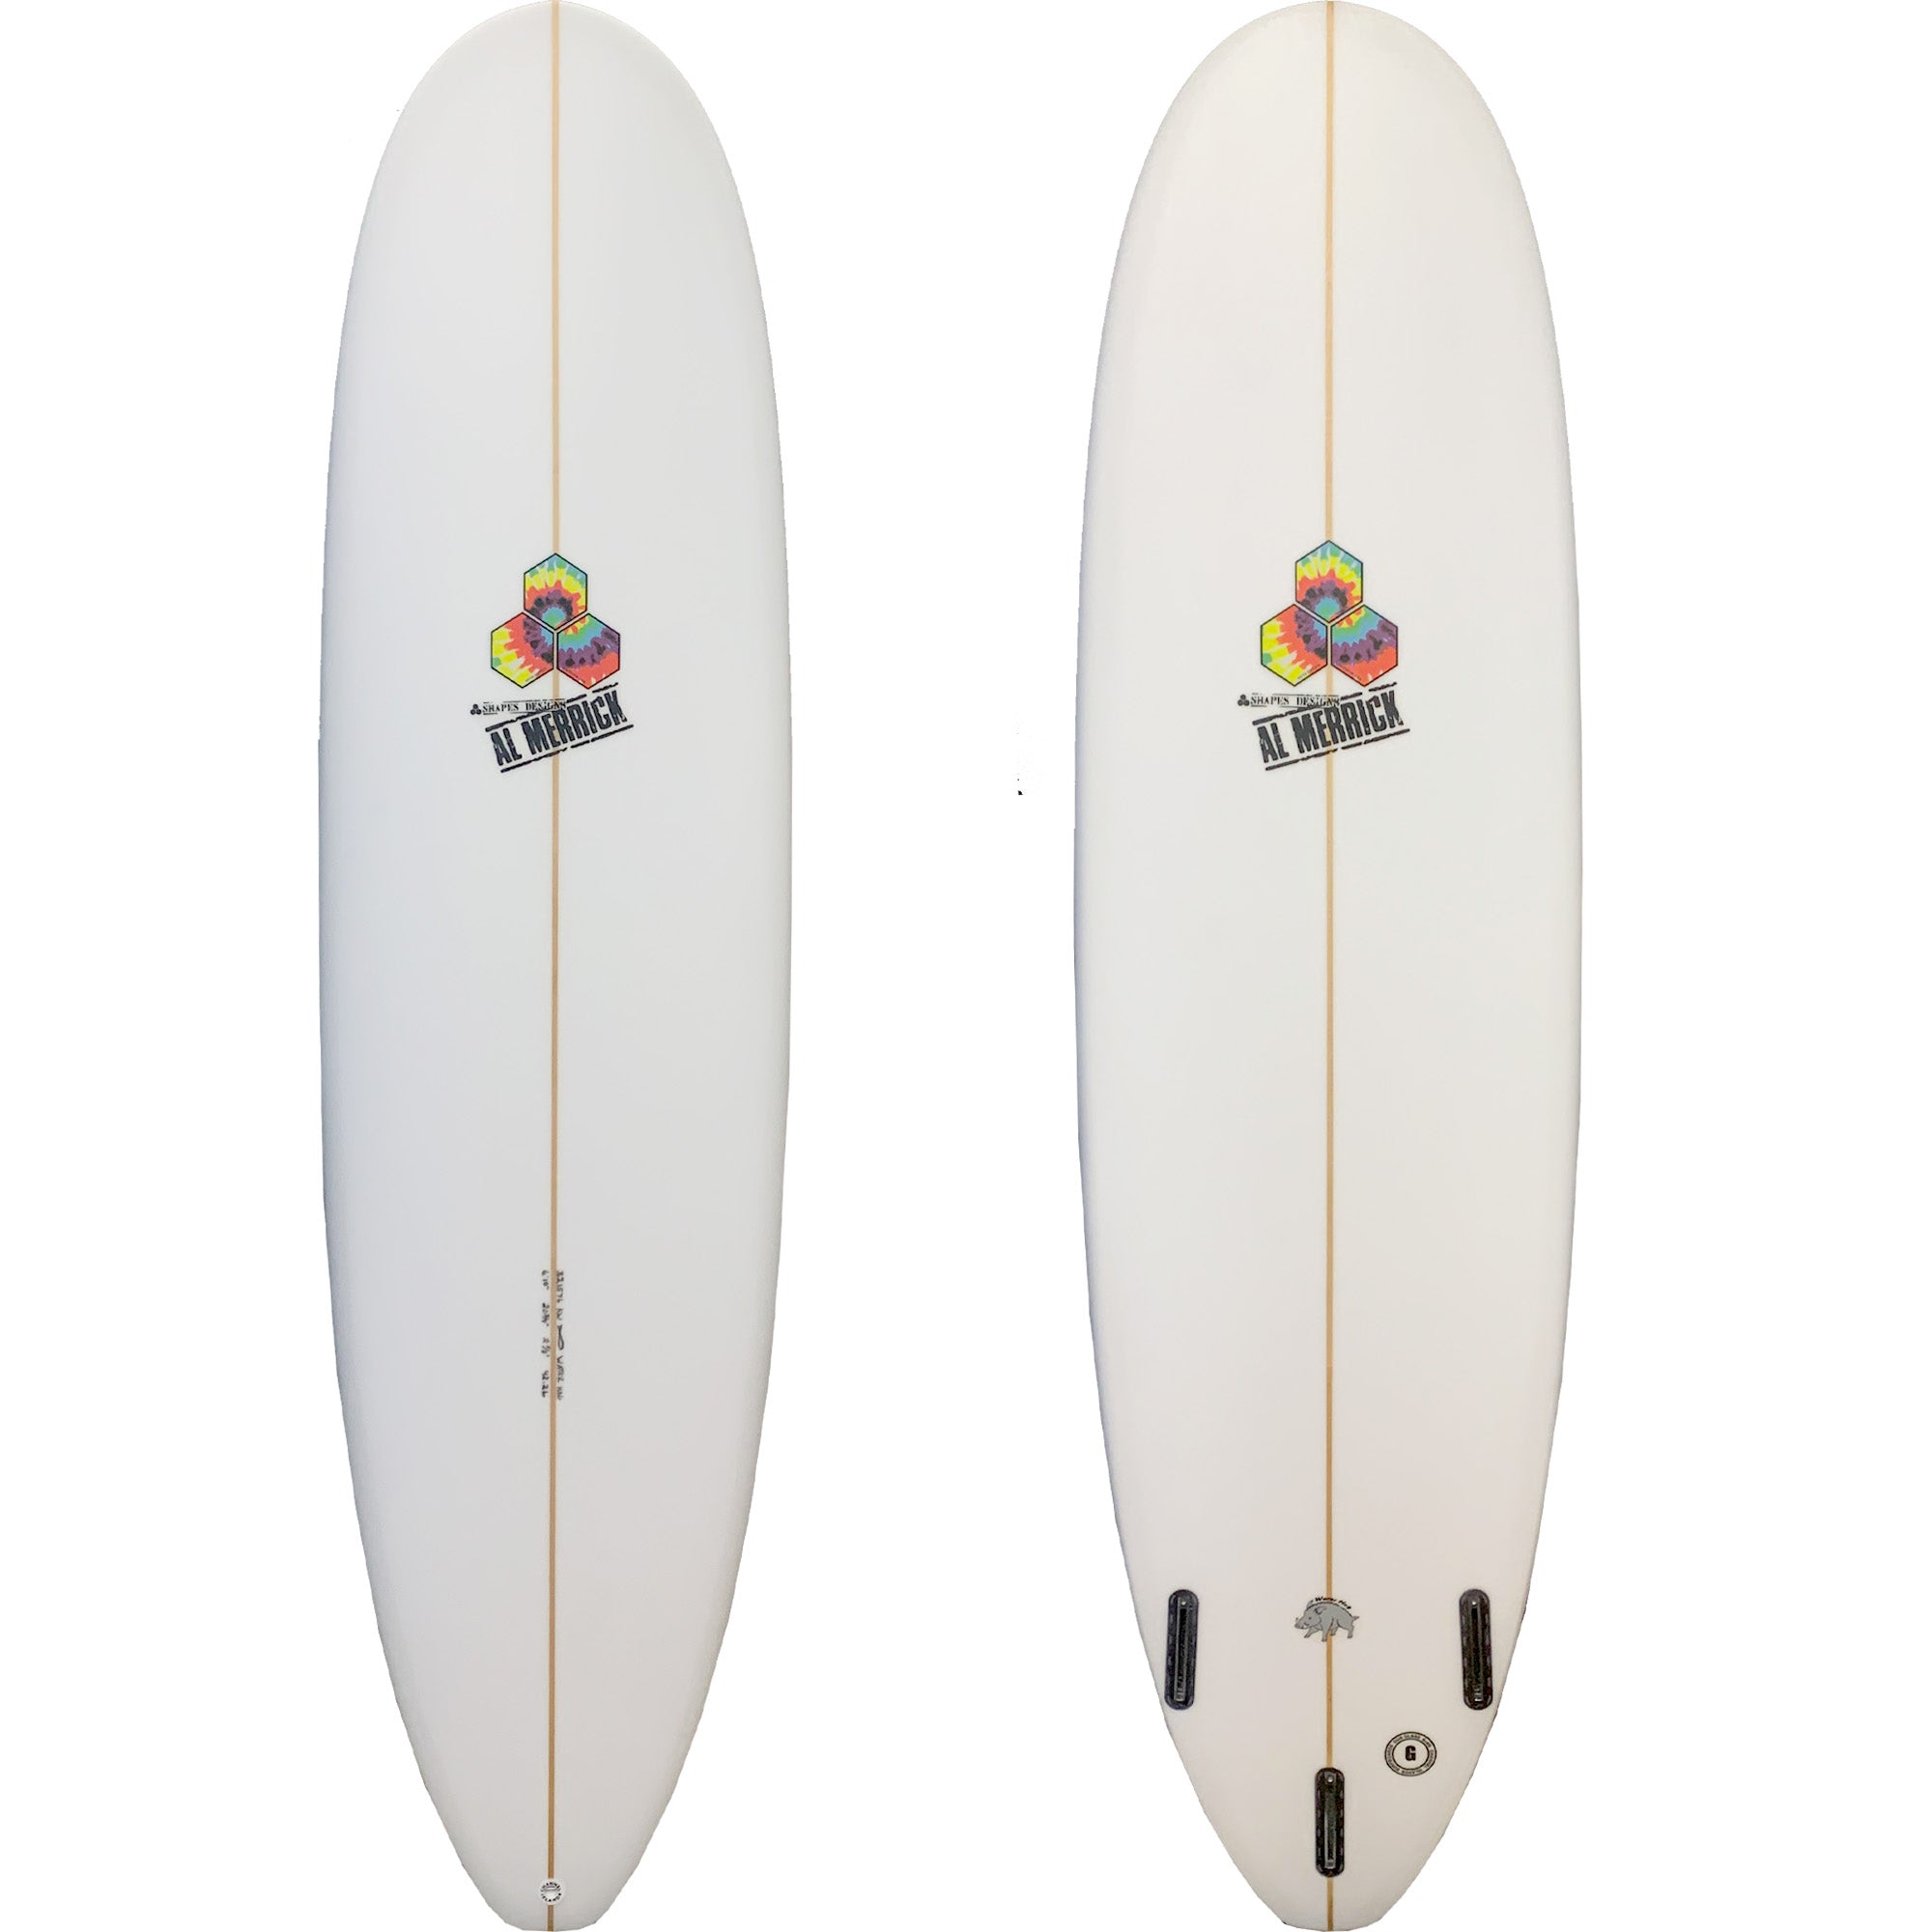 Channel Islands Waterhog Surfboard - Futures